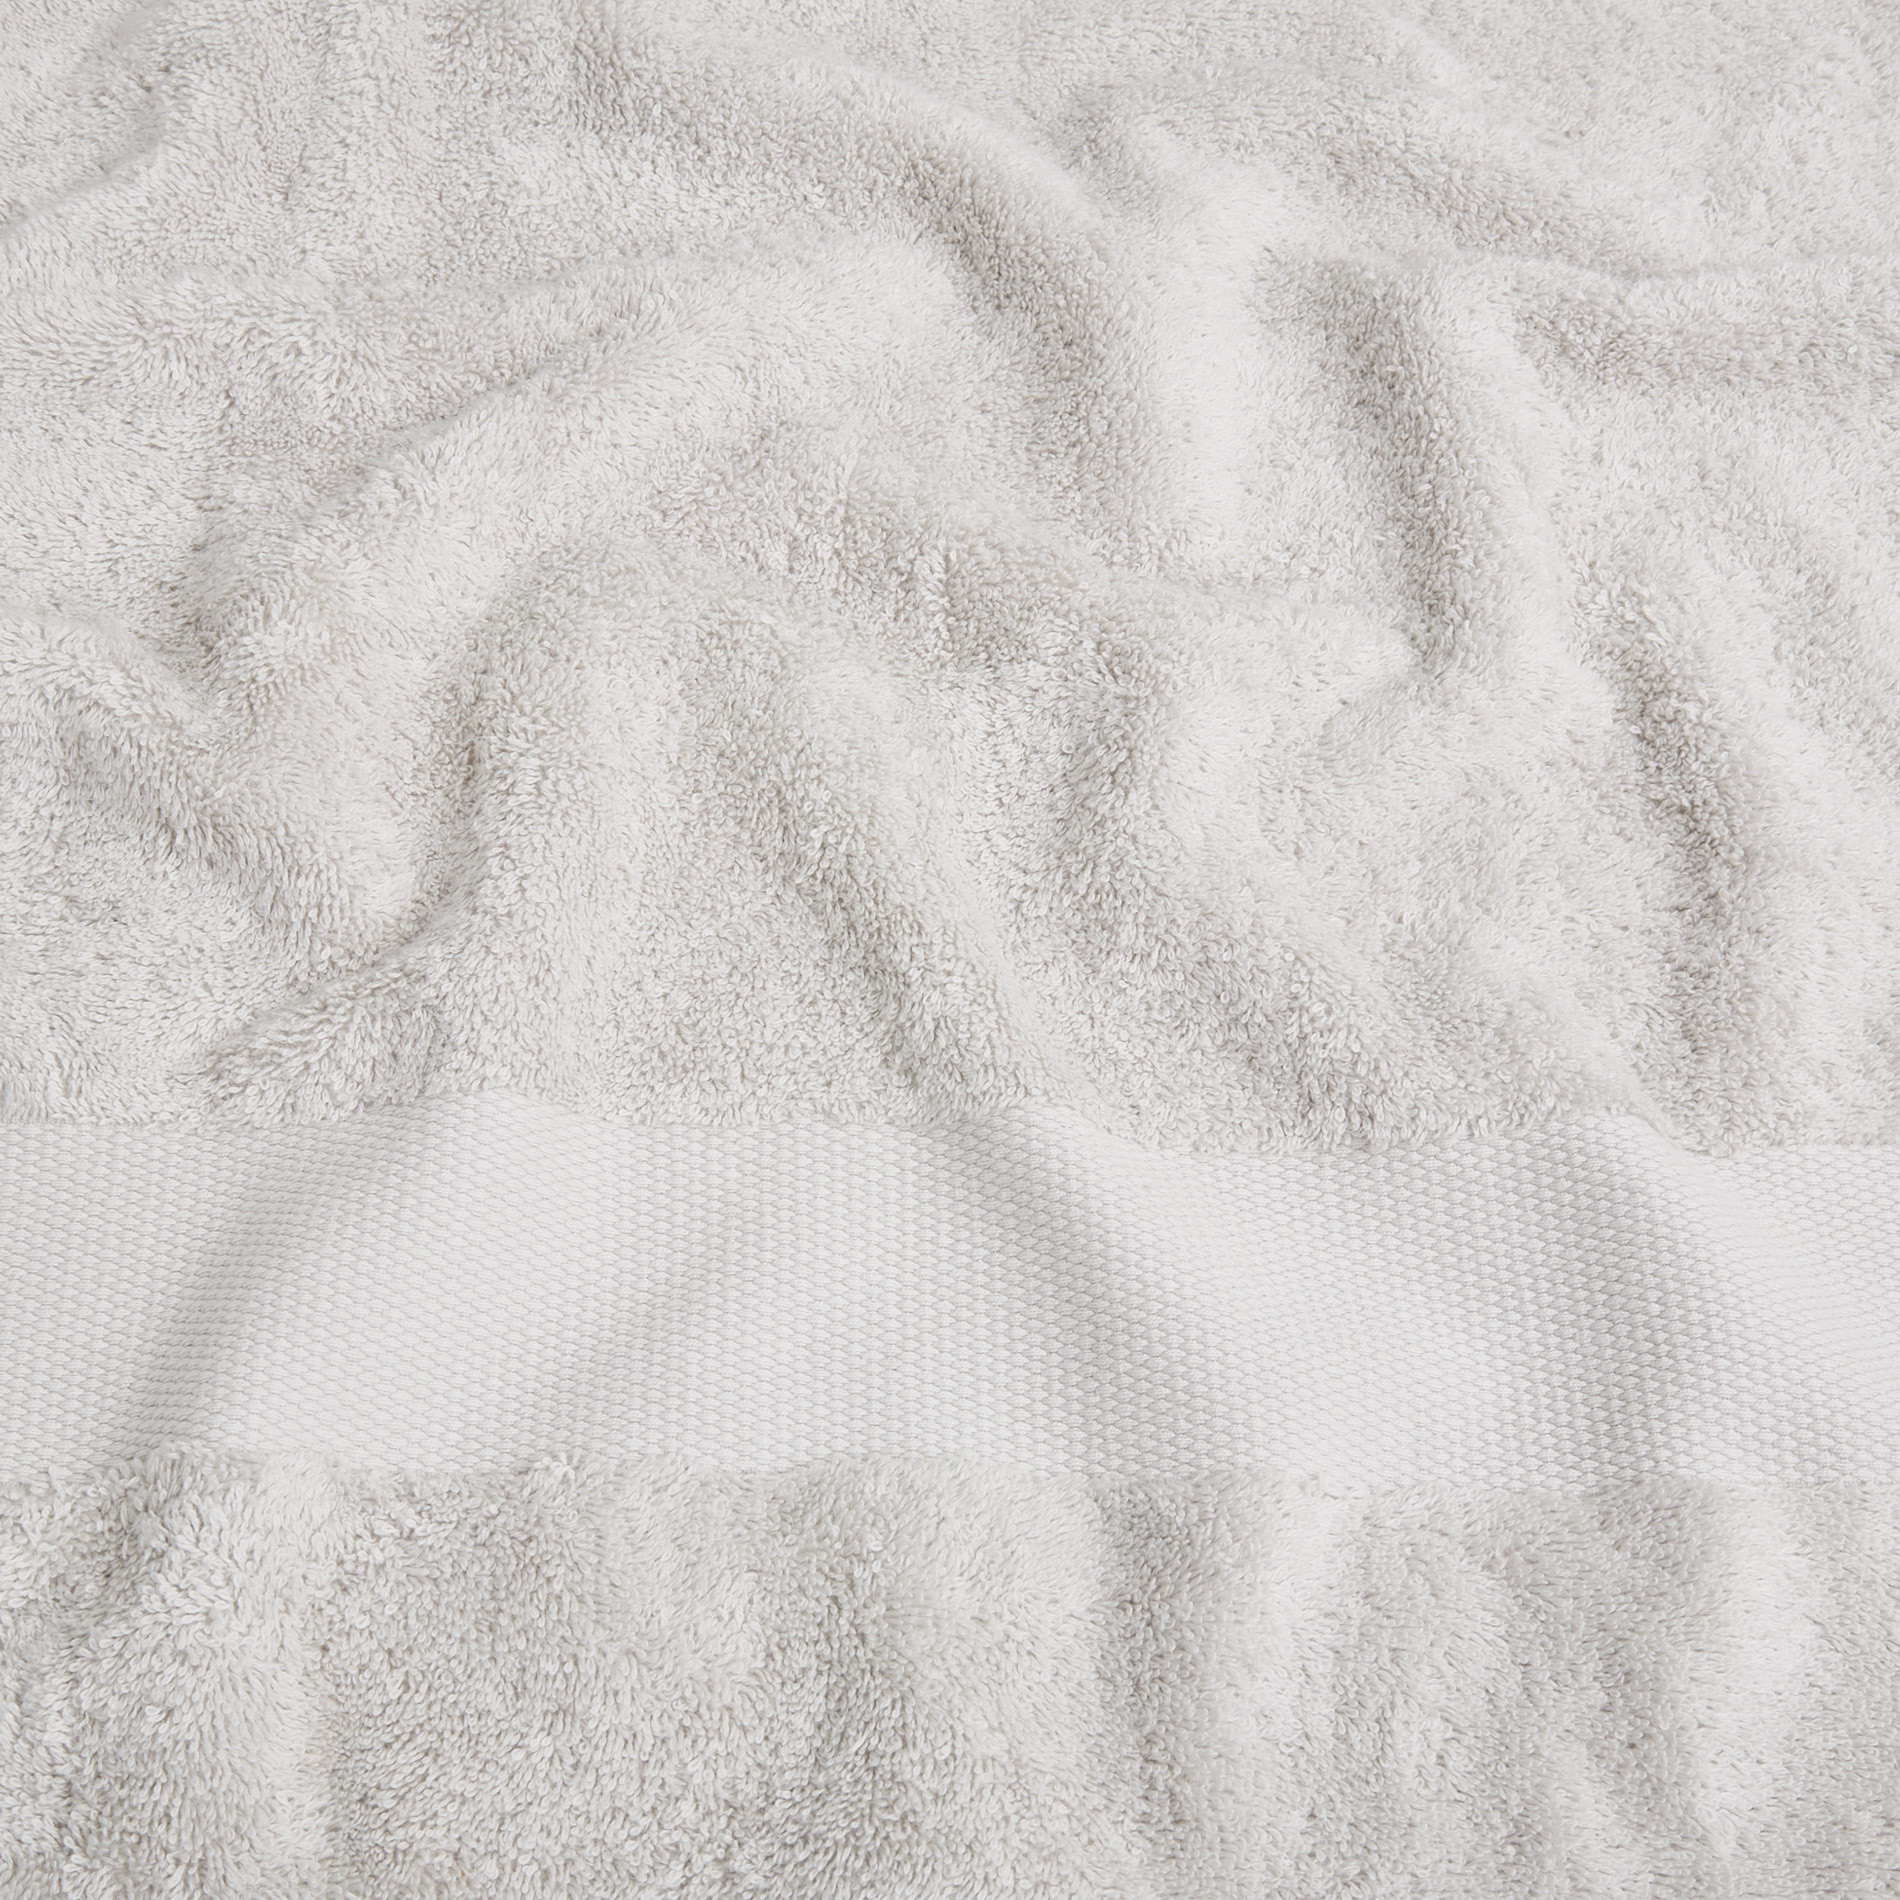 Zefiro pure cotton terry towel, Light Grey, large image number 3